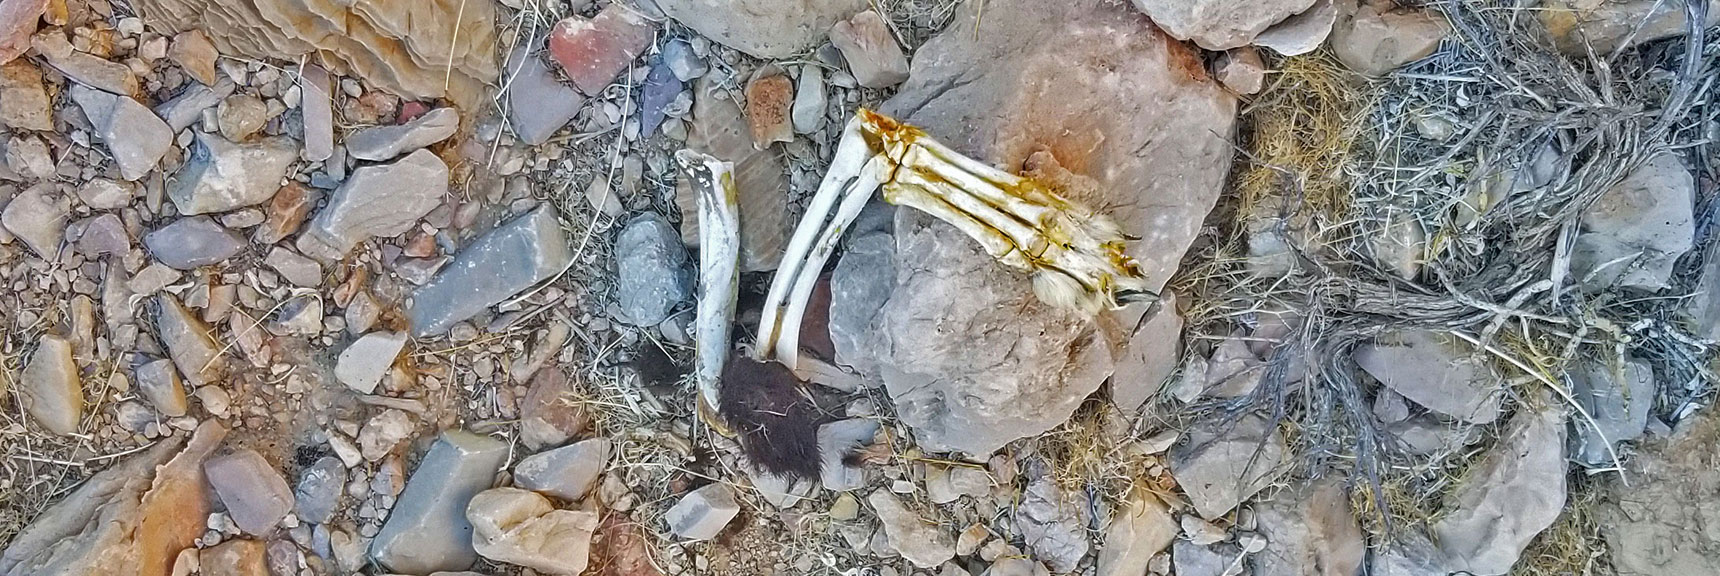 Animal That Didn't Make It in Cairn Wash | Sunrise Mountain, Las Vegas, Nevada